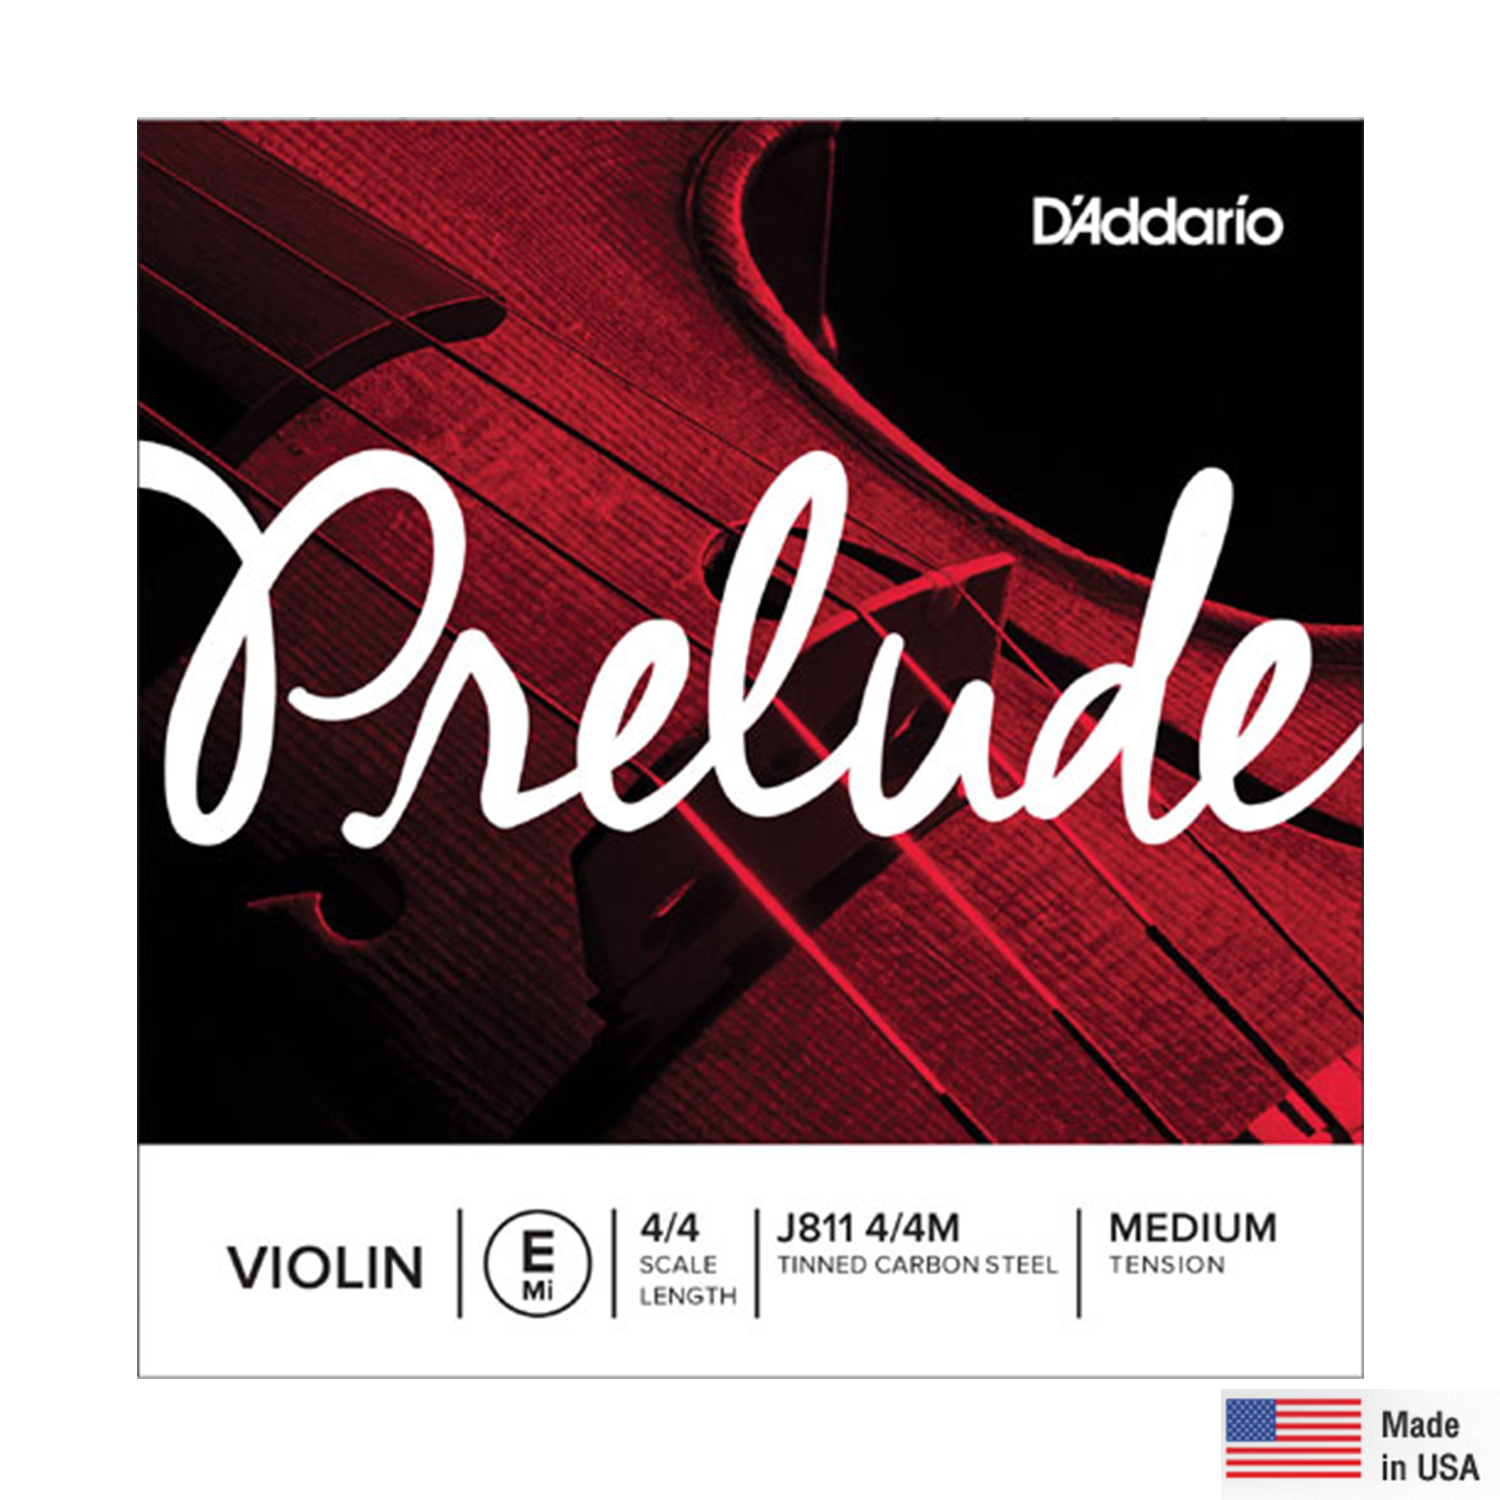 D'Addario® Prelude J811 4/4M สายไวโอลิน แบบแยก สาย E / สาย 1  ของแท้ 100% (Violin String, Medium Tension, Tinned Carbon Steel) ** Made in USA **